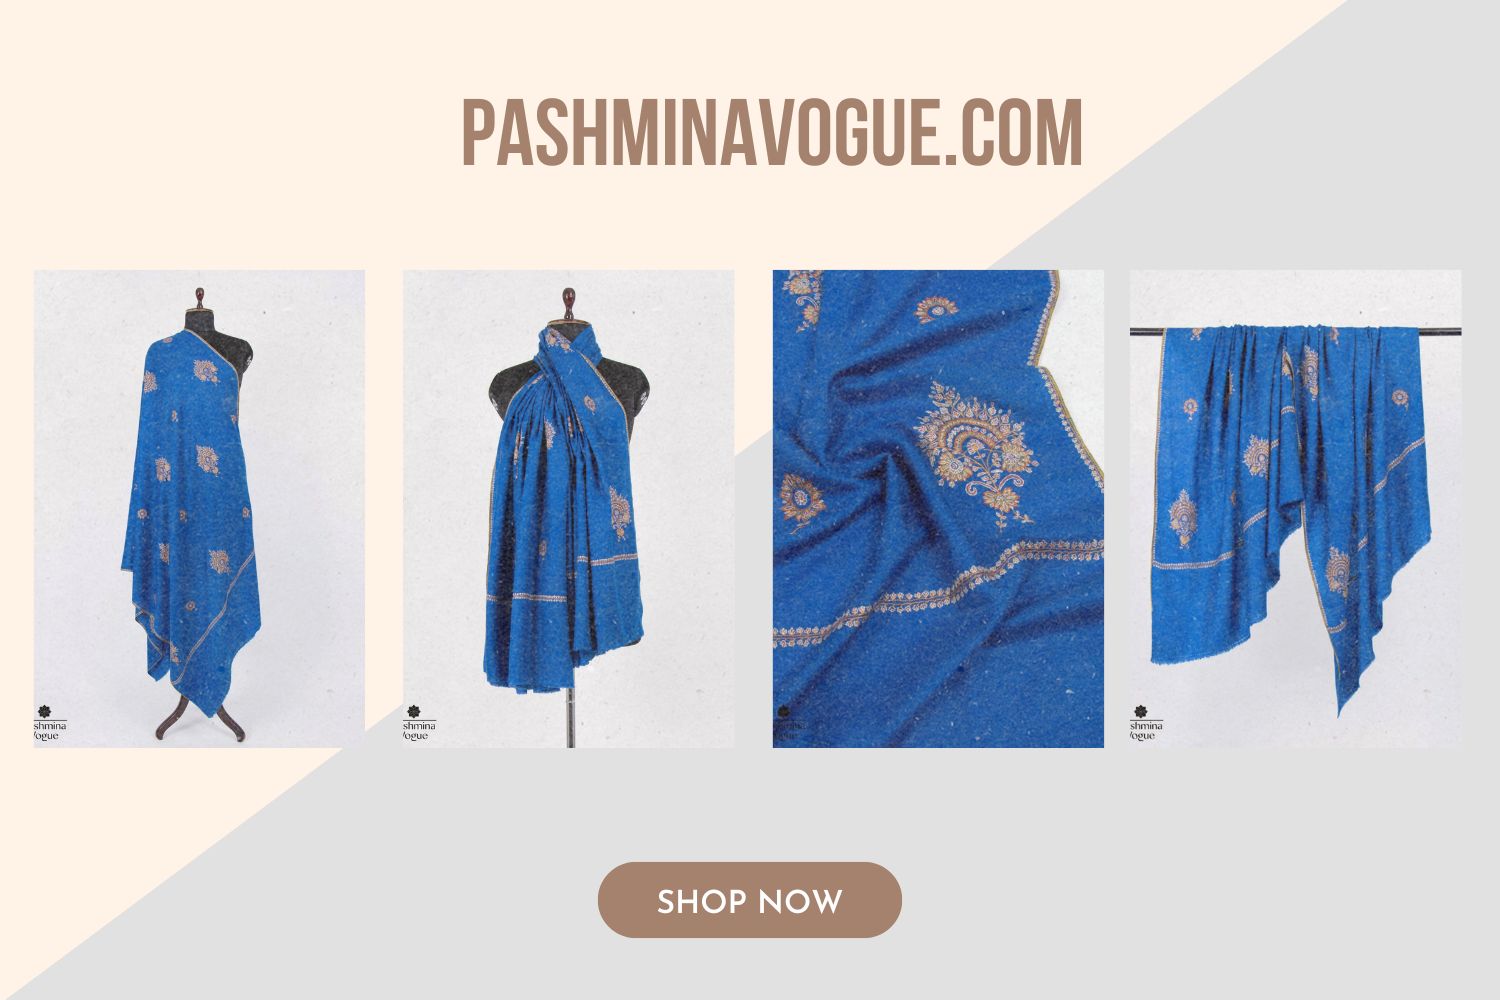 How to know Pashmina is original?